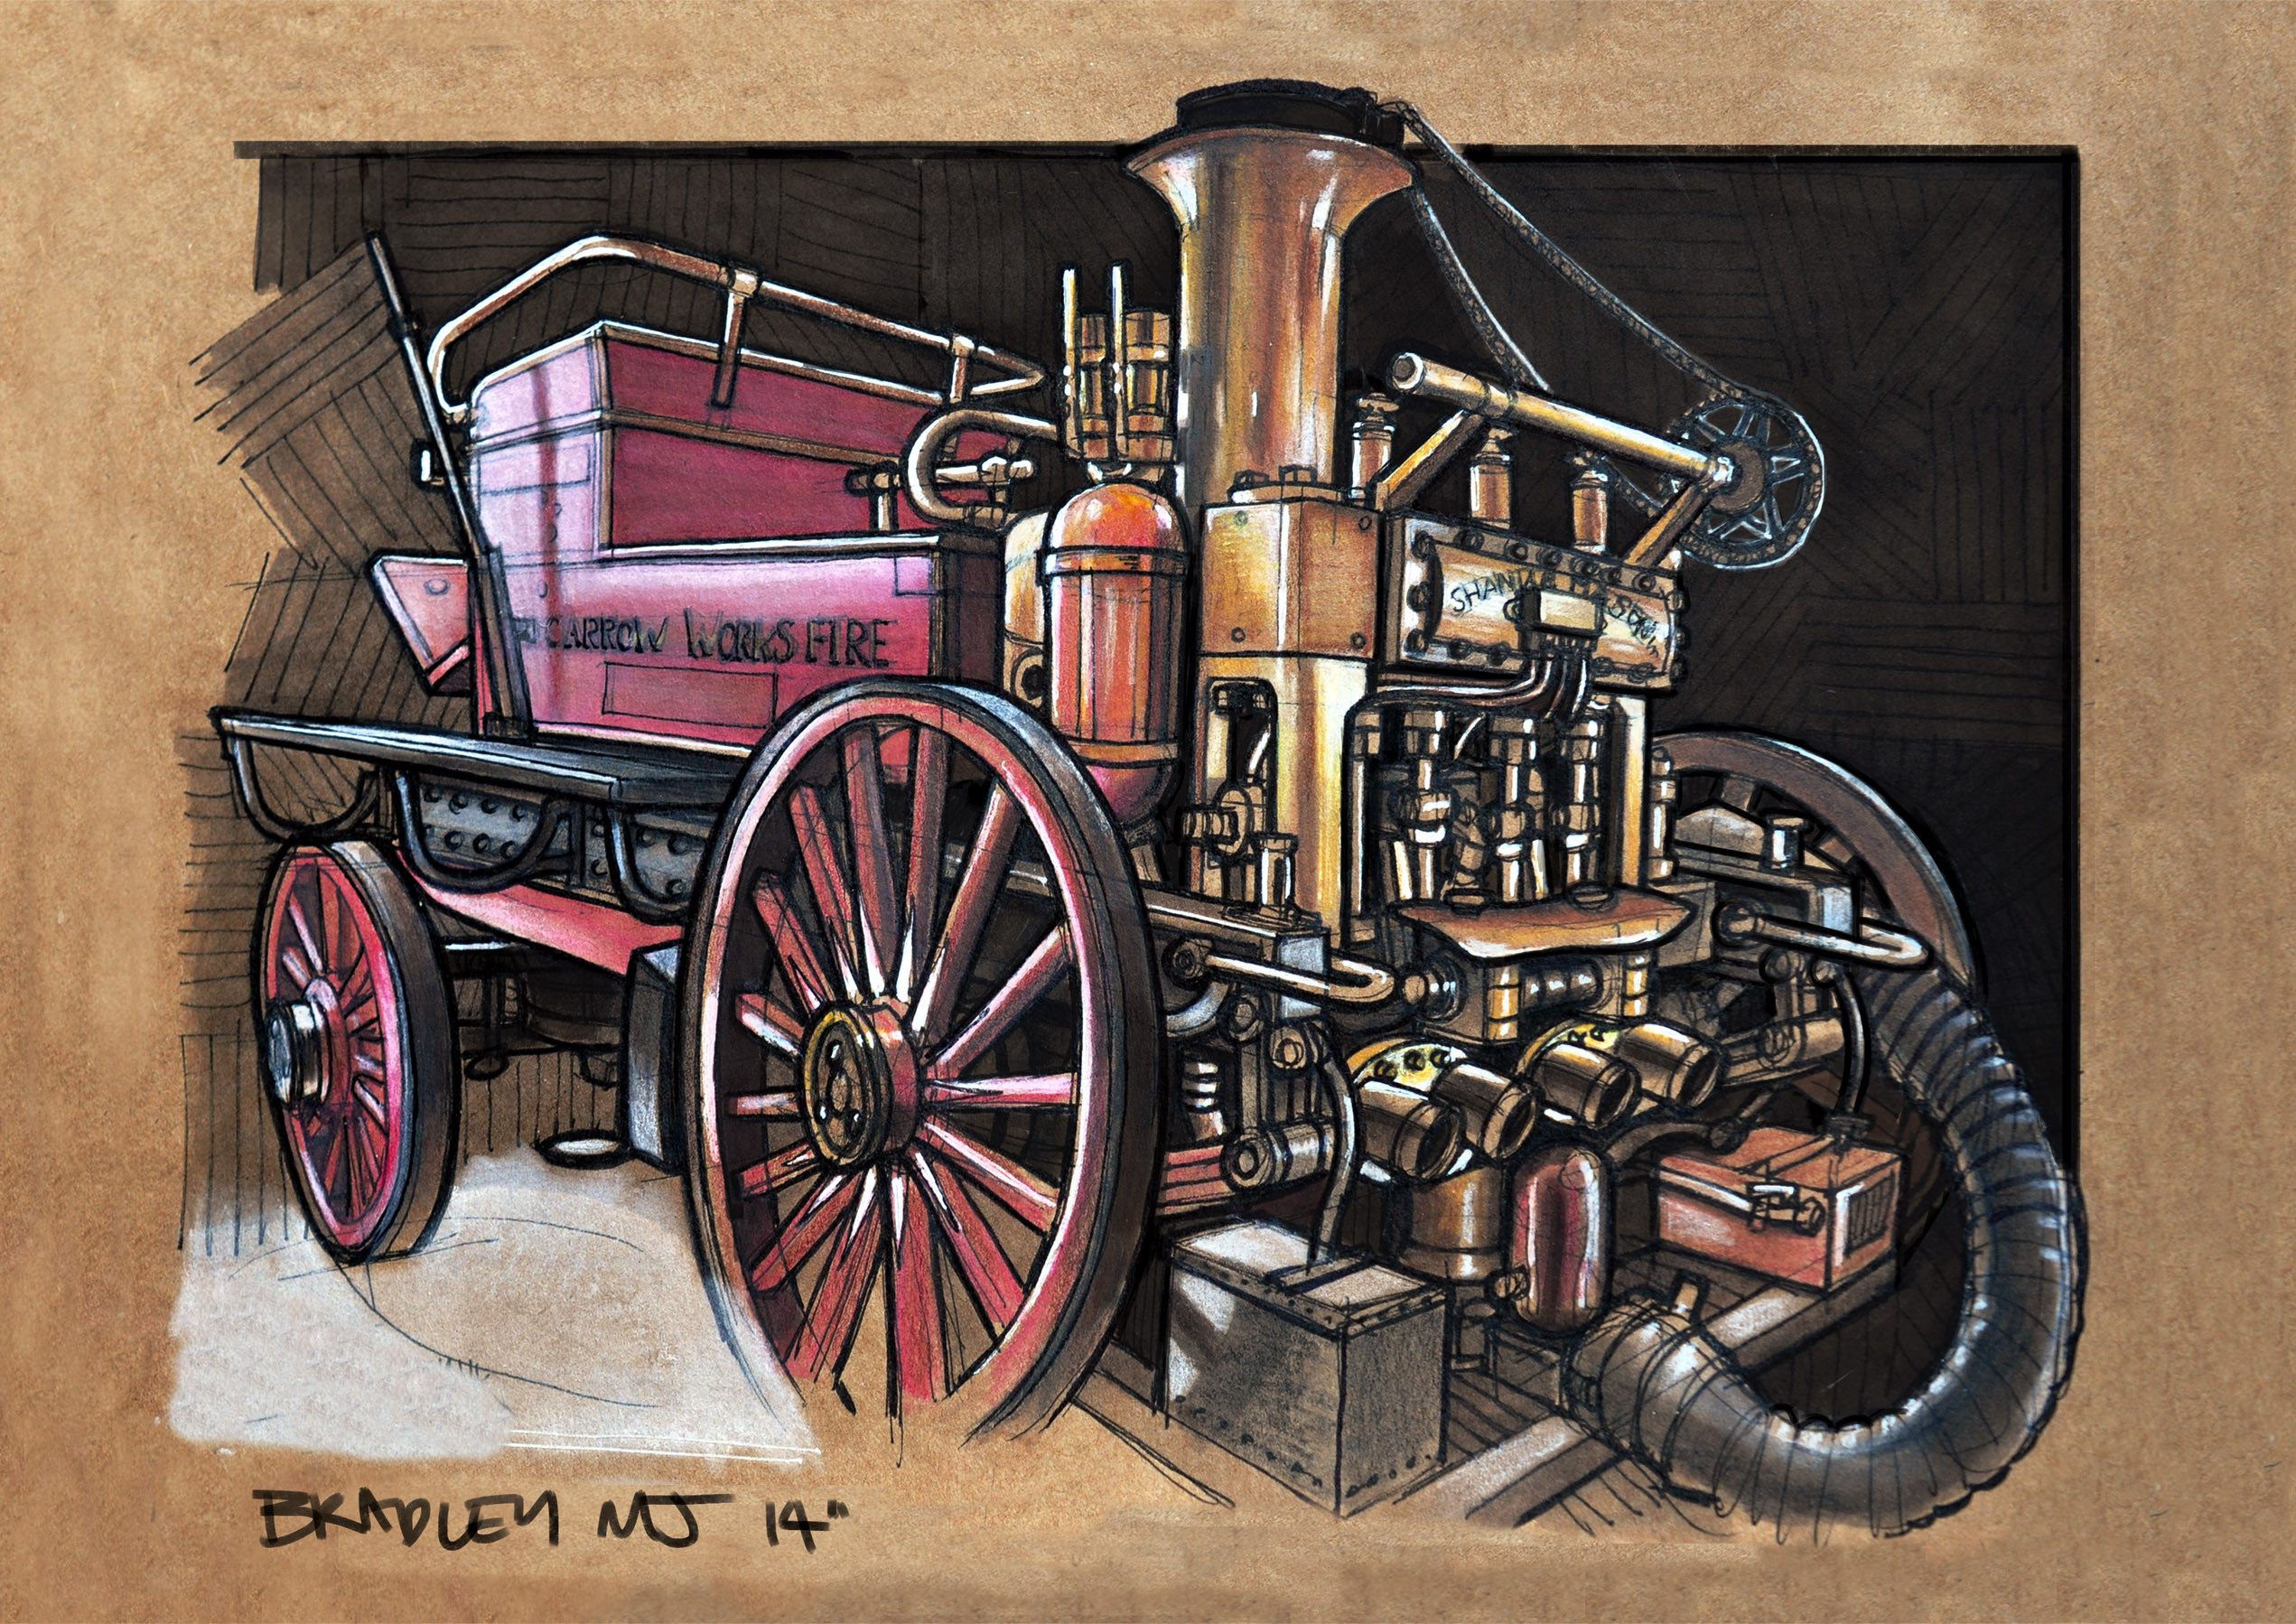 Fire steam engine @ Bridewell museum Norwich UK